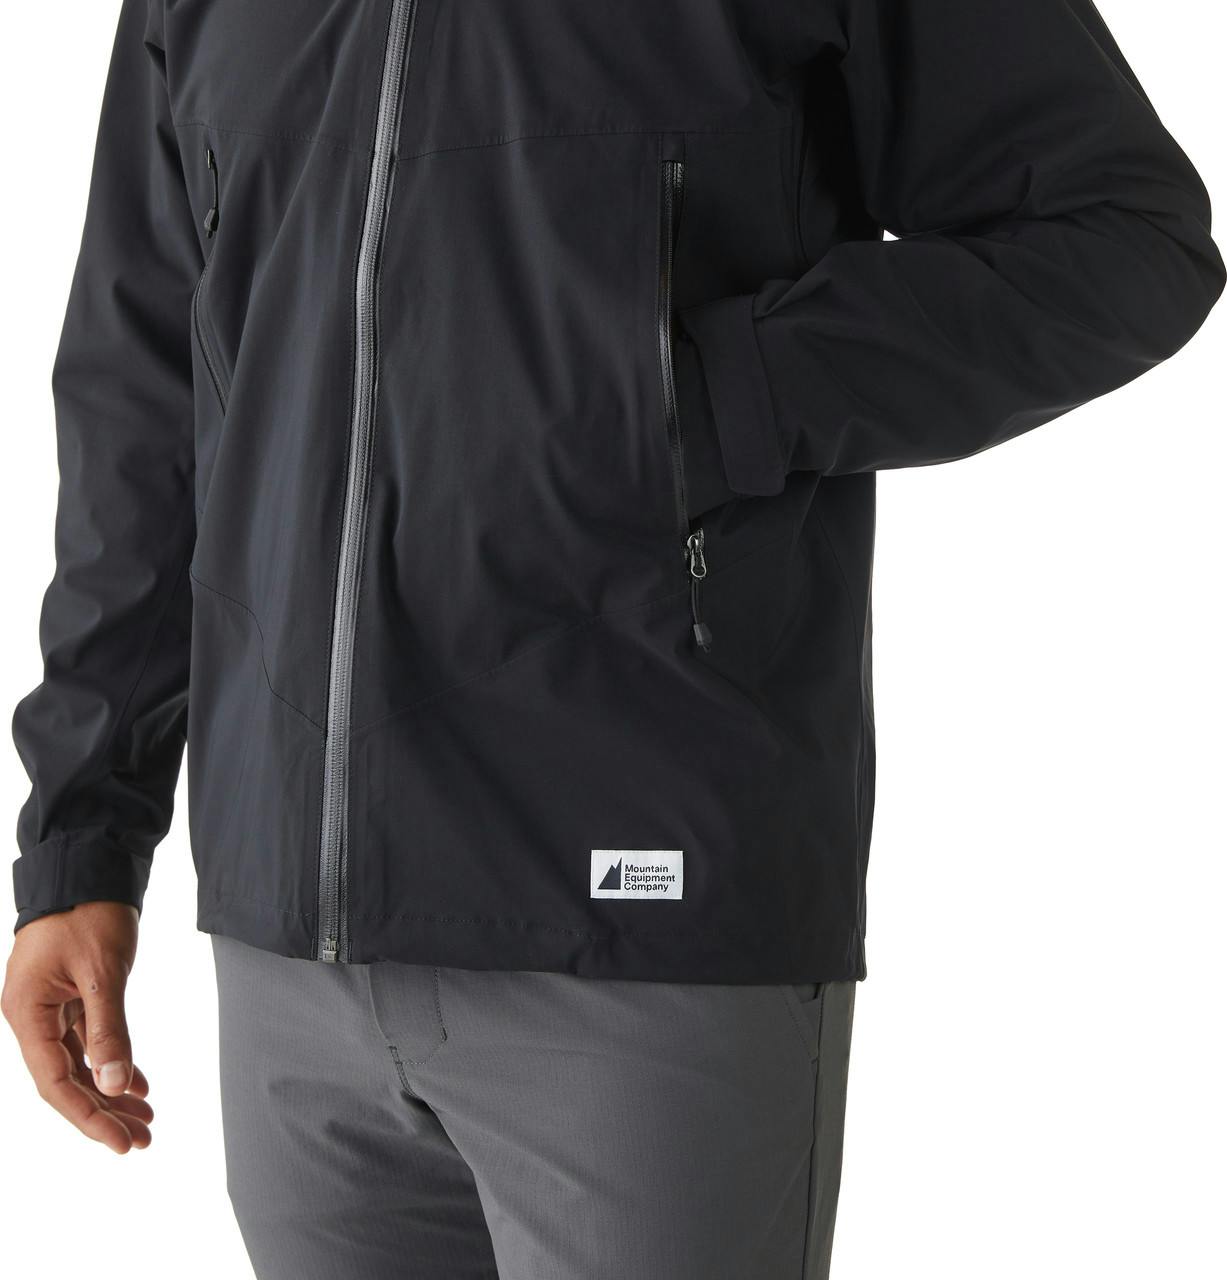 Hydrofoil Stretch Jacket Black